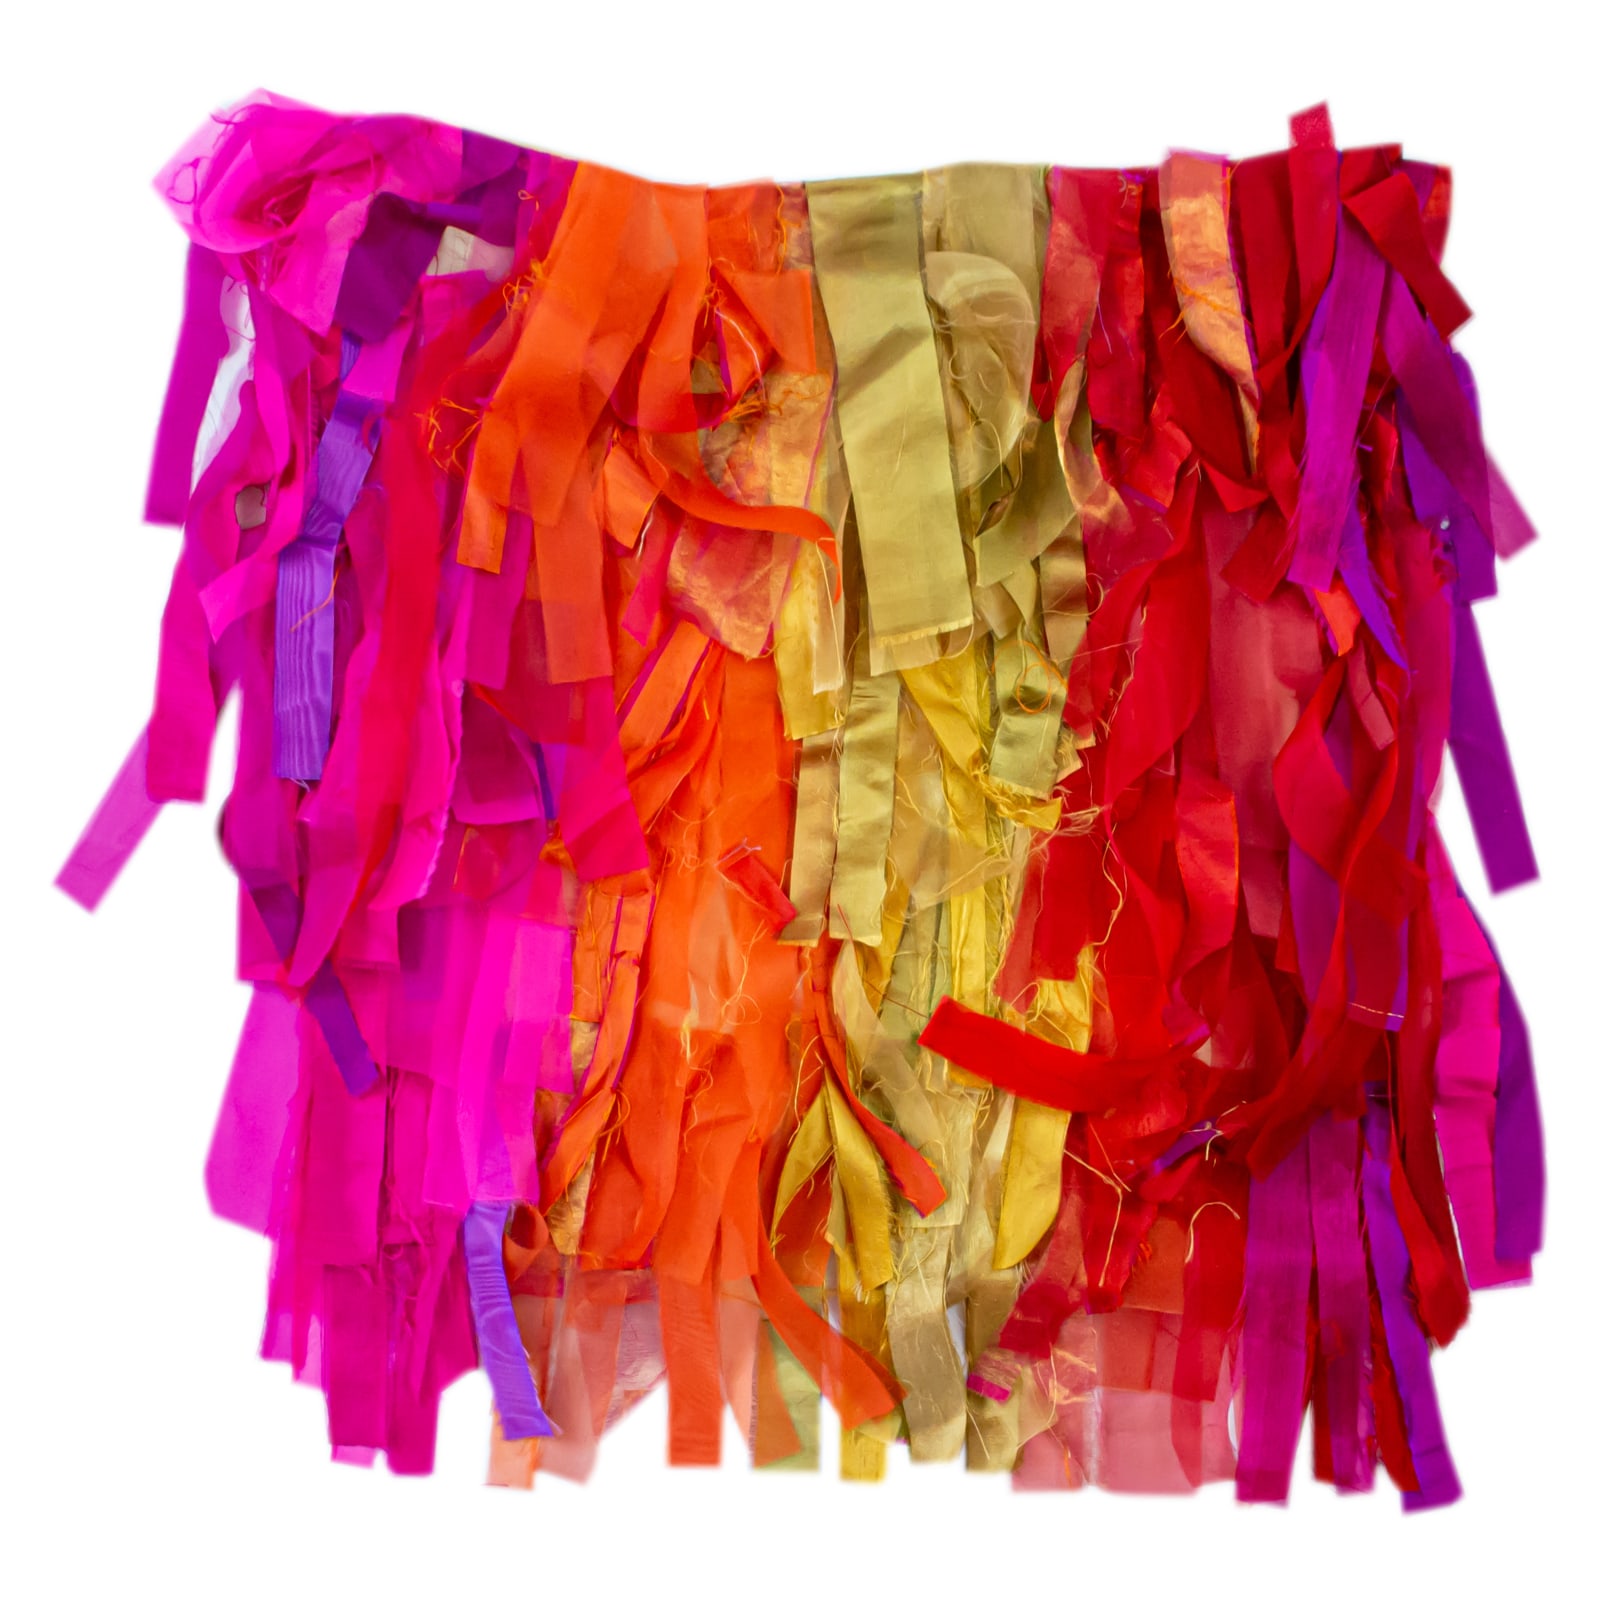 Yolanda Sanchez Shanti, 2021 Silk fabric remnants, thread